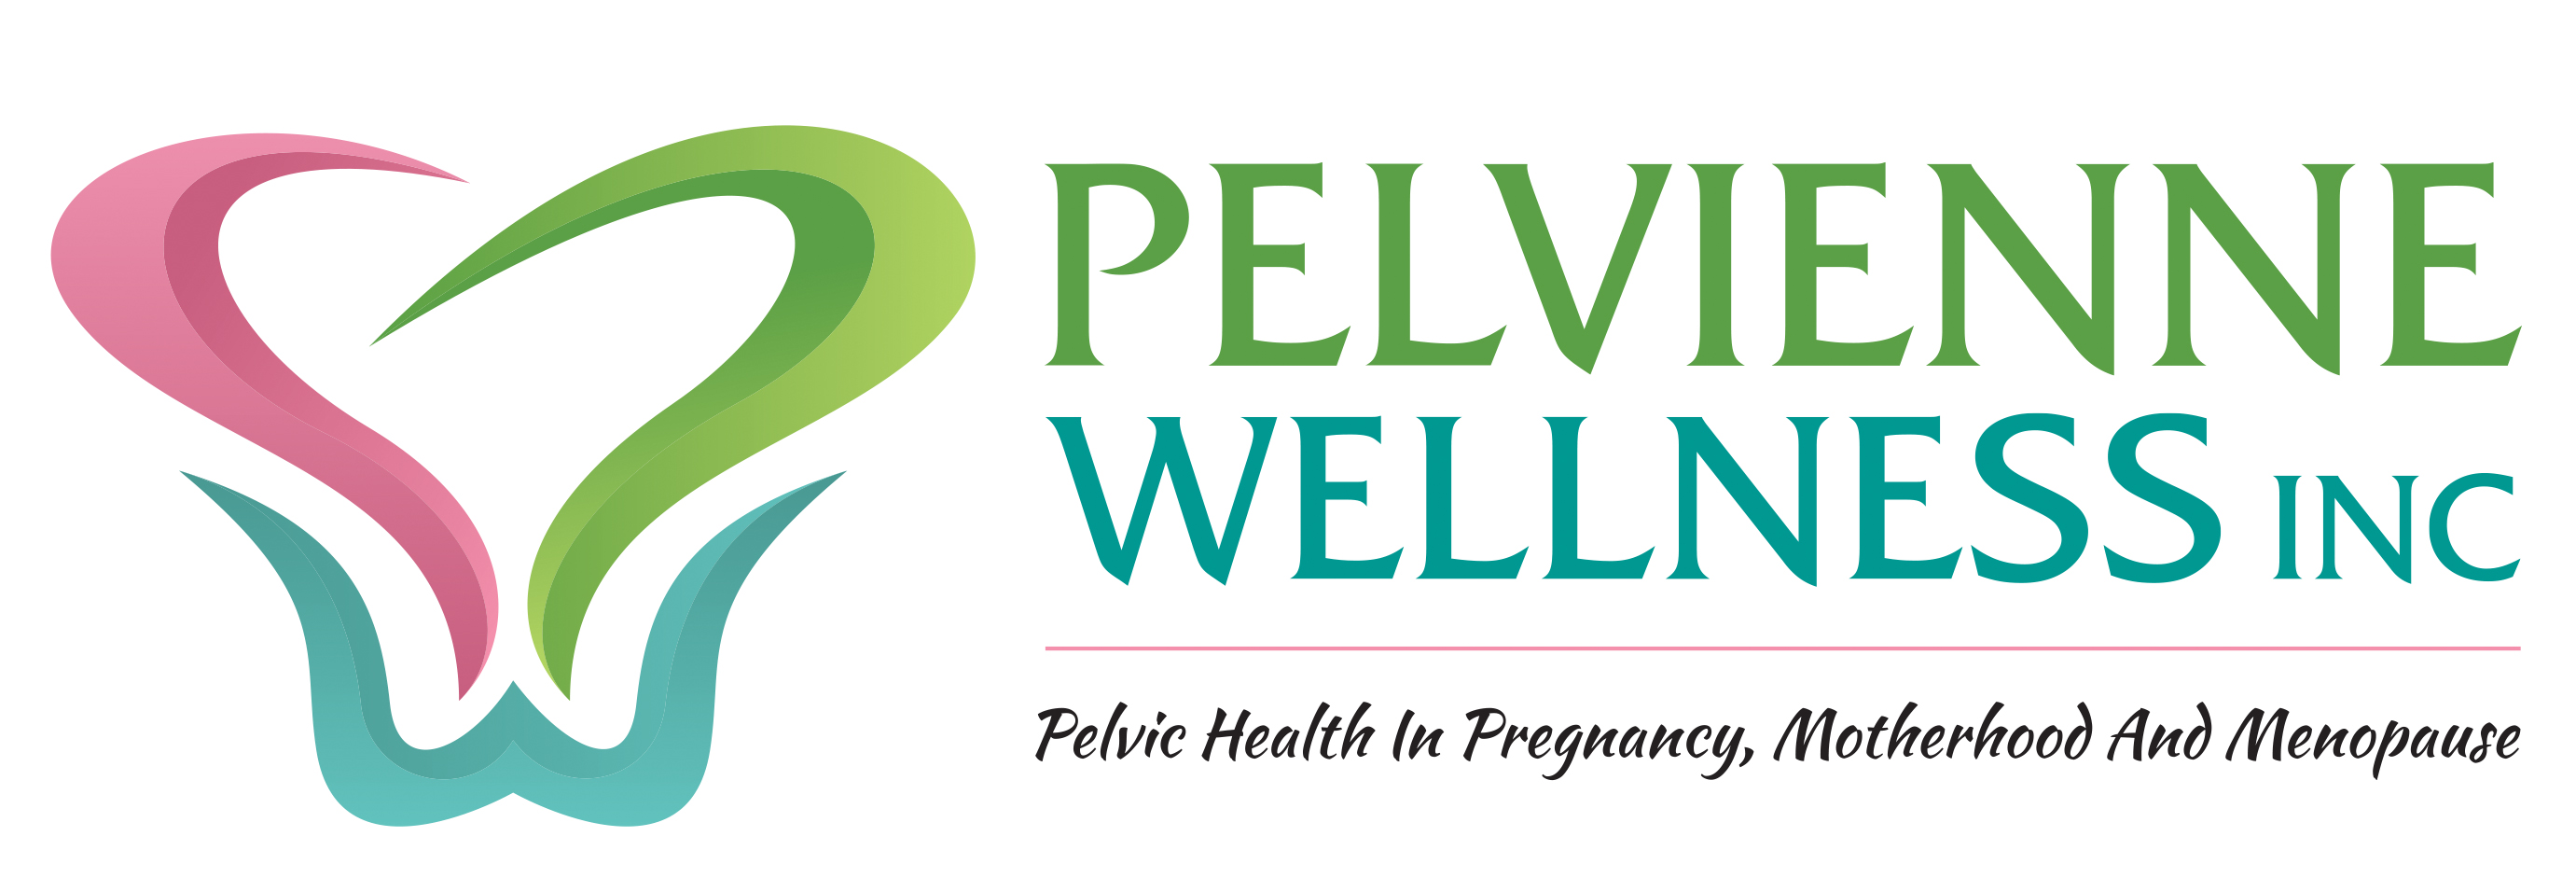 Pelvienne Wellness Logo (1)